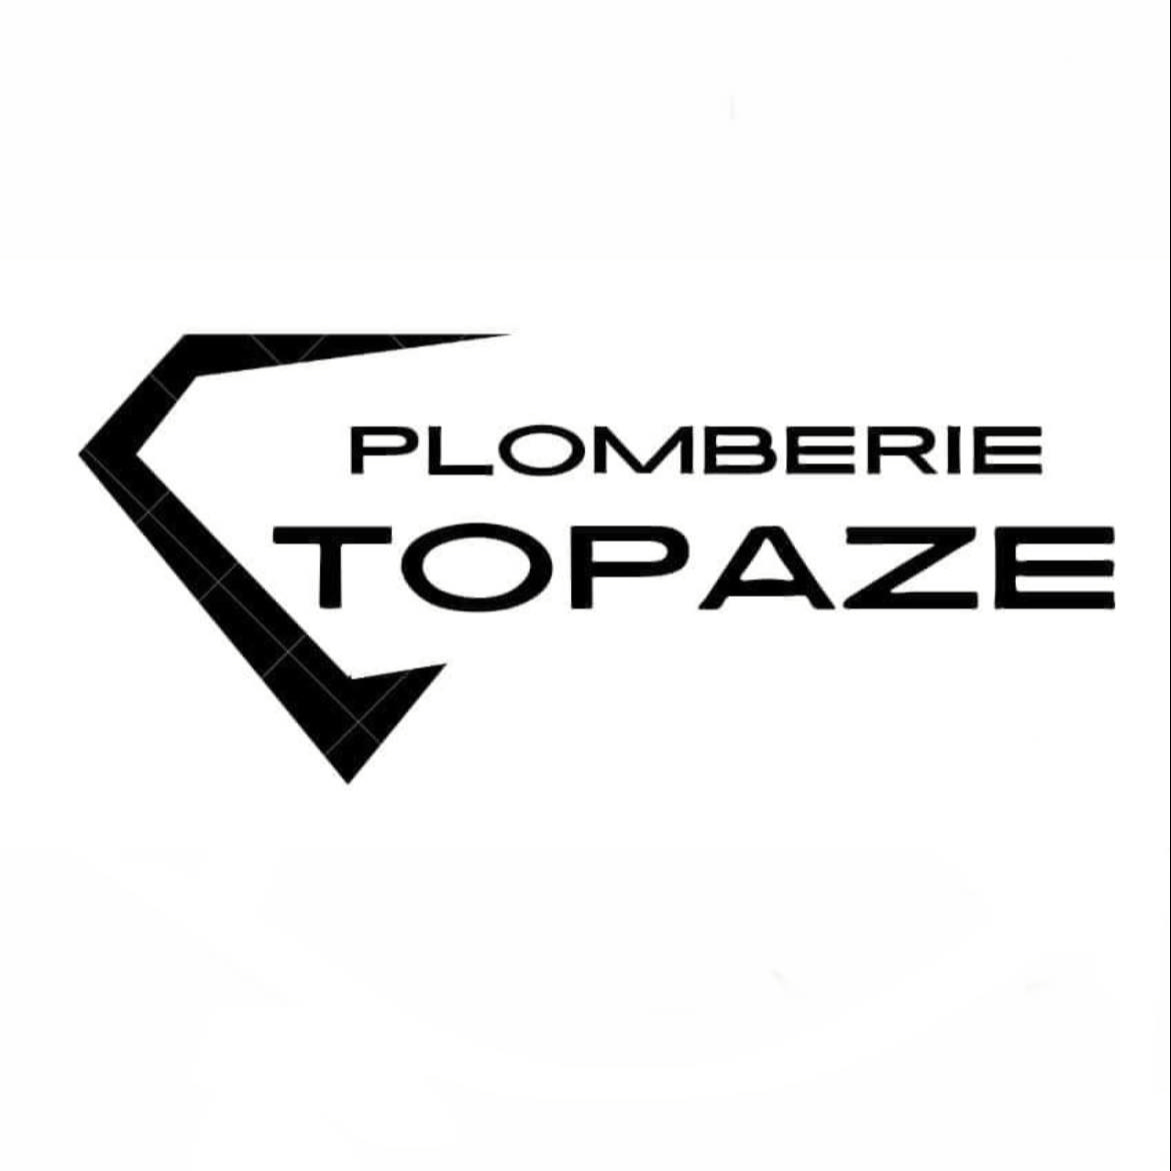 Plomberie Topaze inc. - Plombiers et entrepreneurs en plomberie